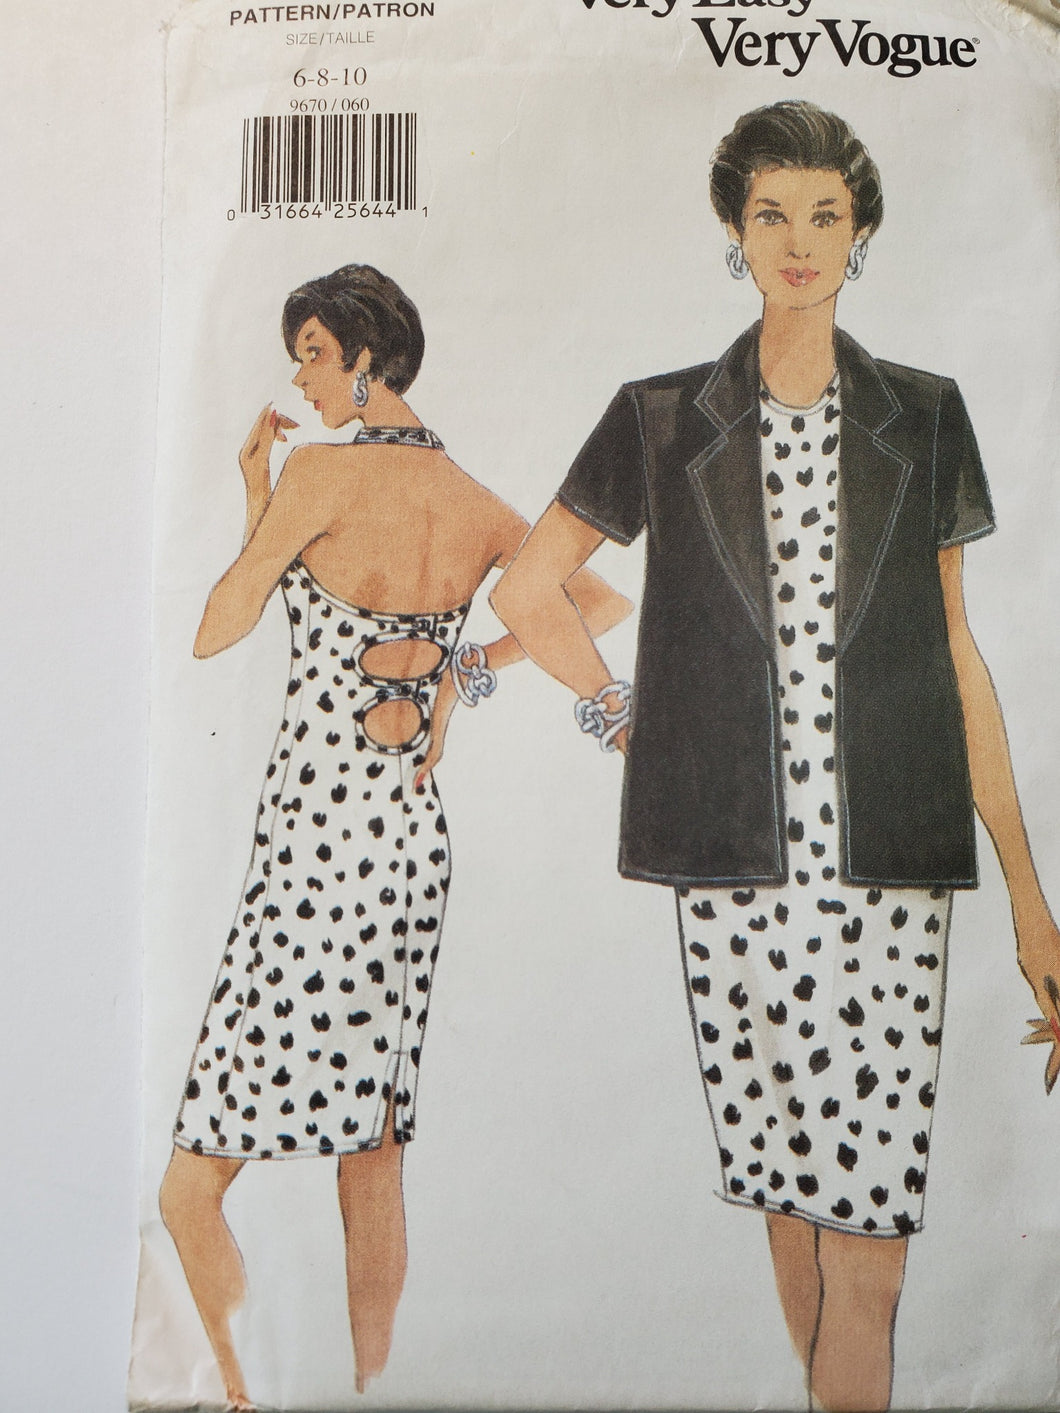 Vogue Pattern 9670, UNCUT, Dress and Jacket Size 6-8-10